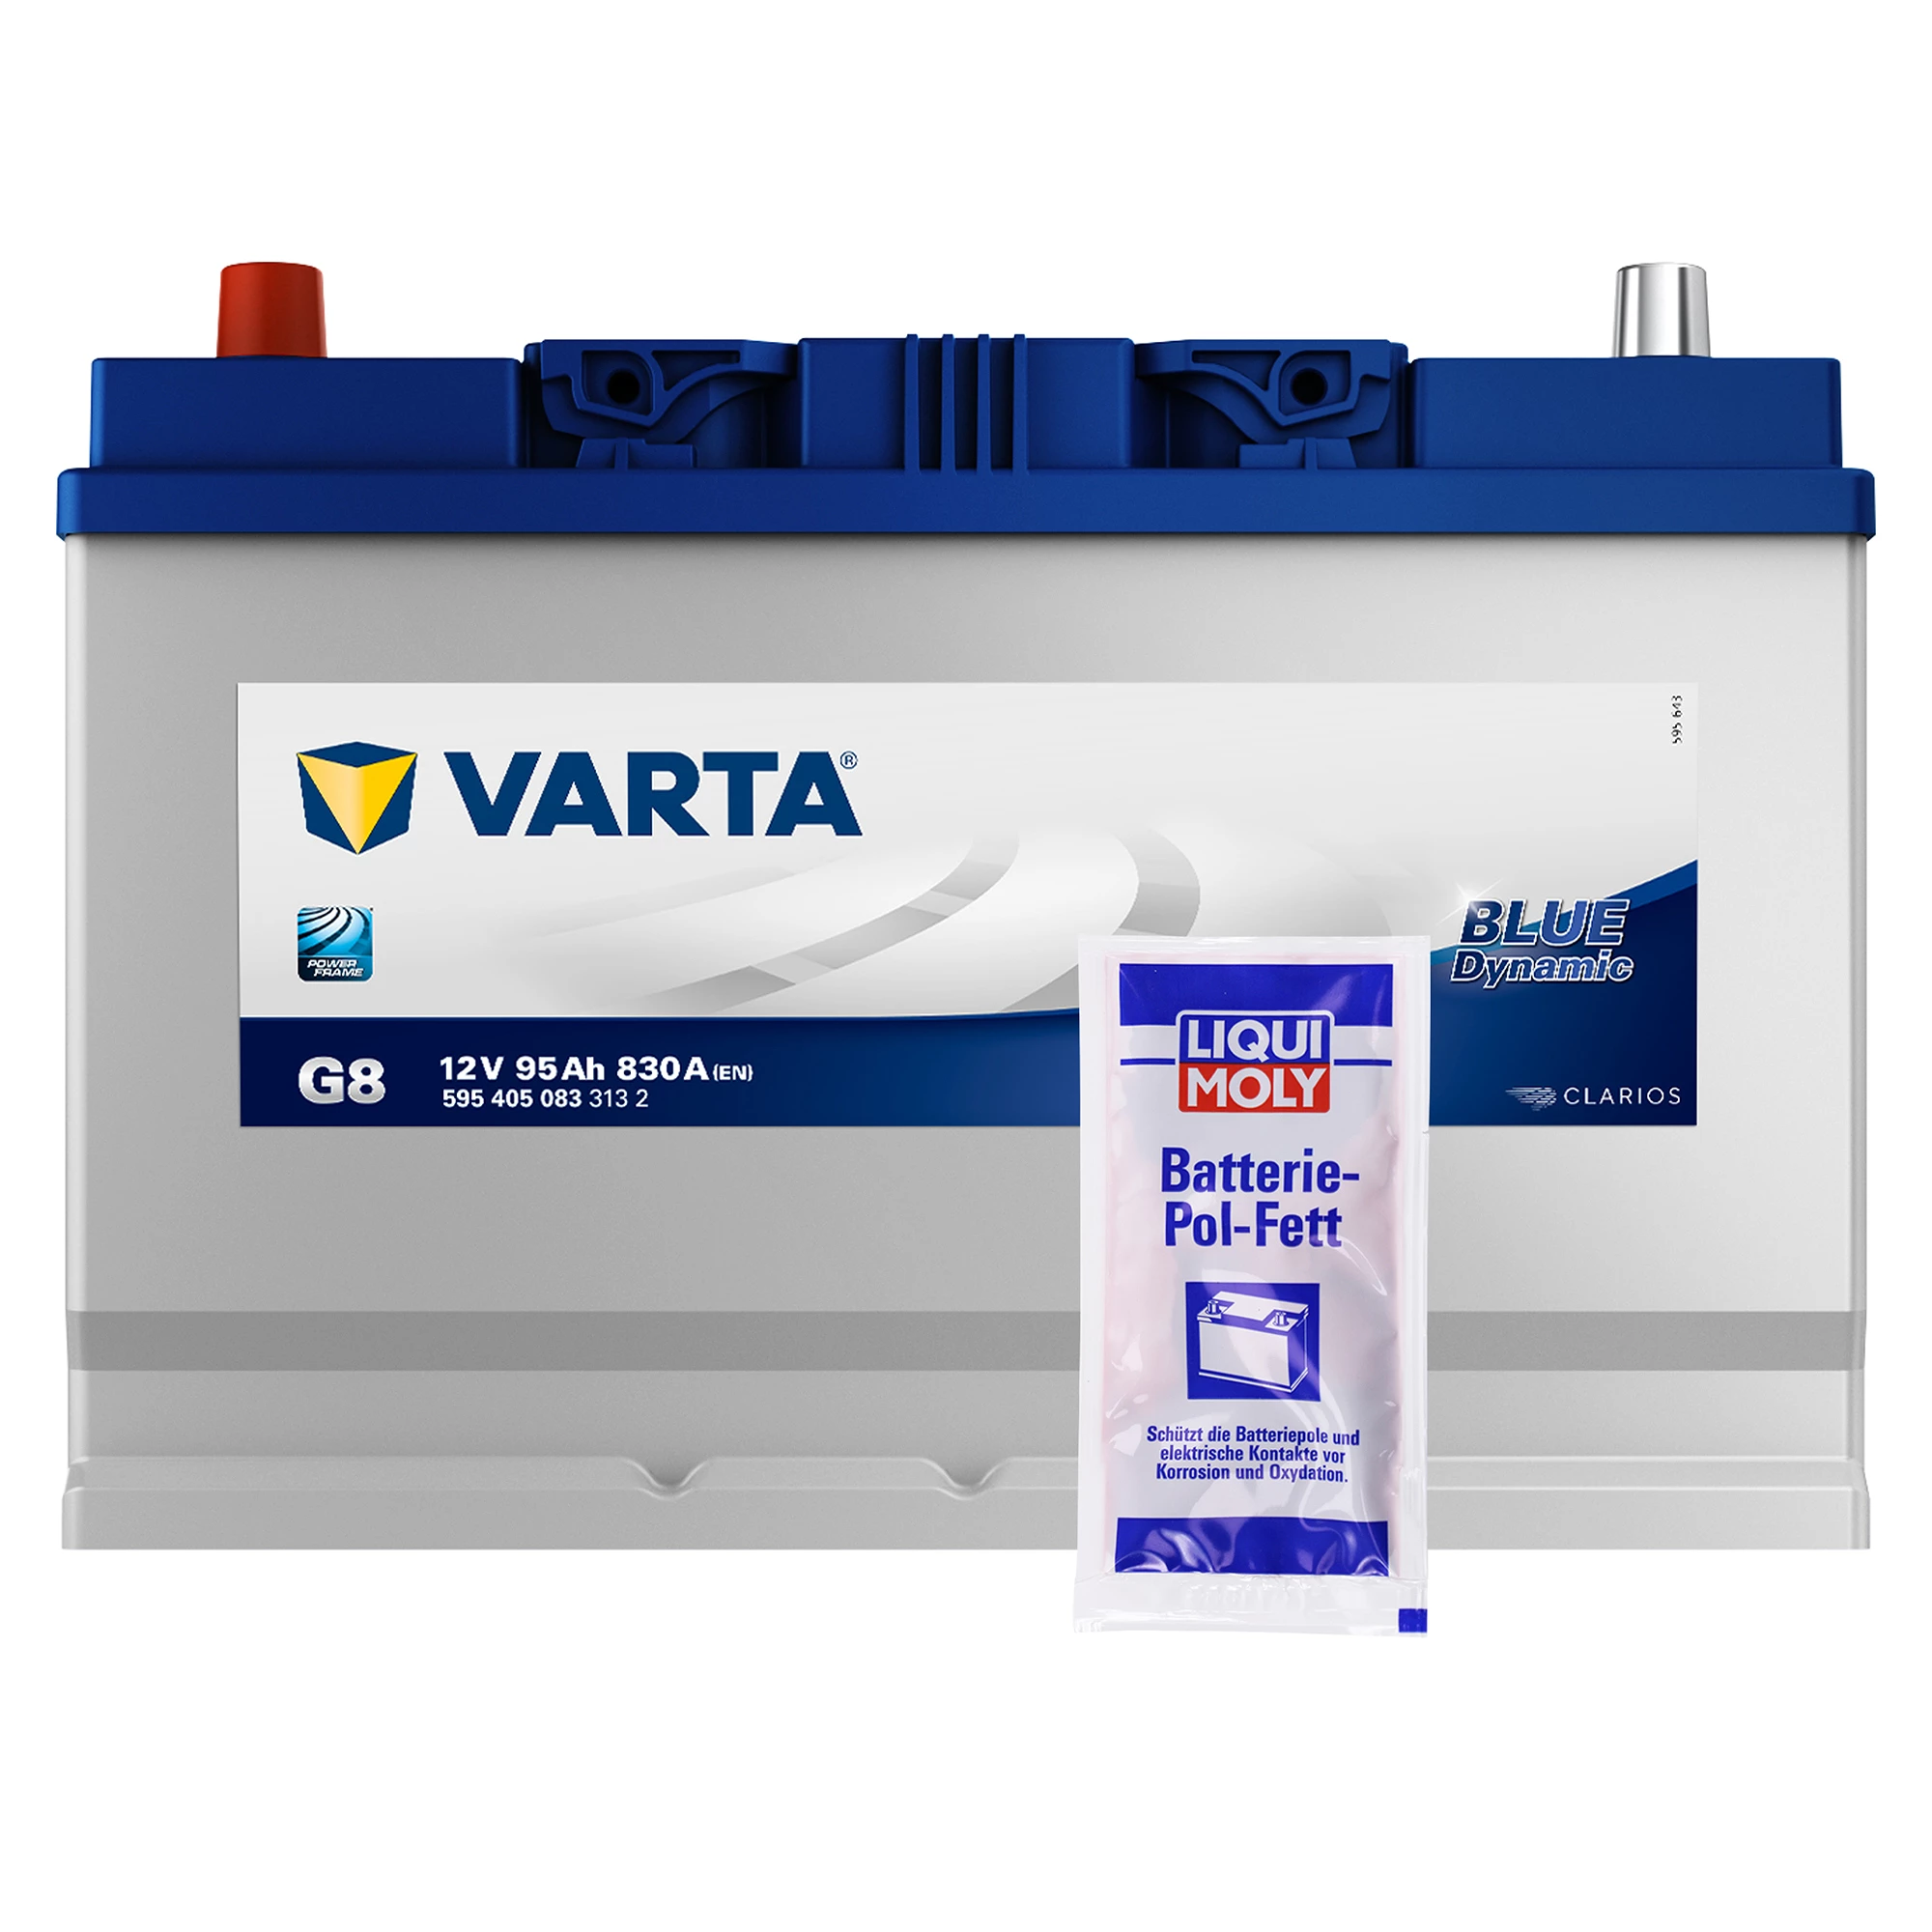 VARTA Starterbatterie Blue 95Ah 830 A G8 + Pol-Fett 10g 5954050833132  günstig online kaufen